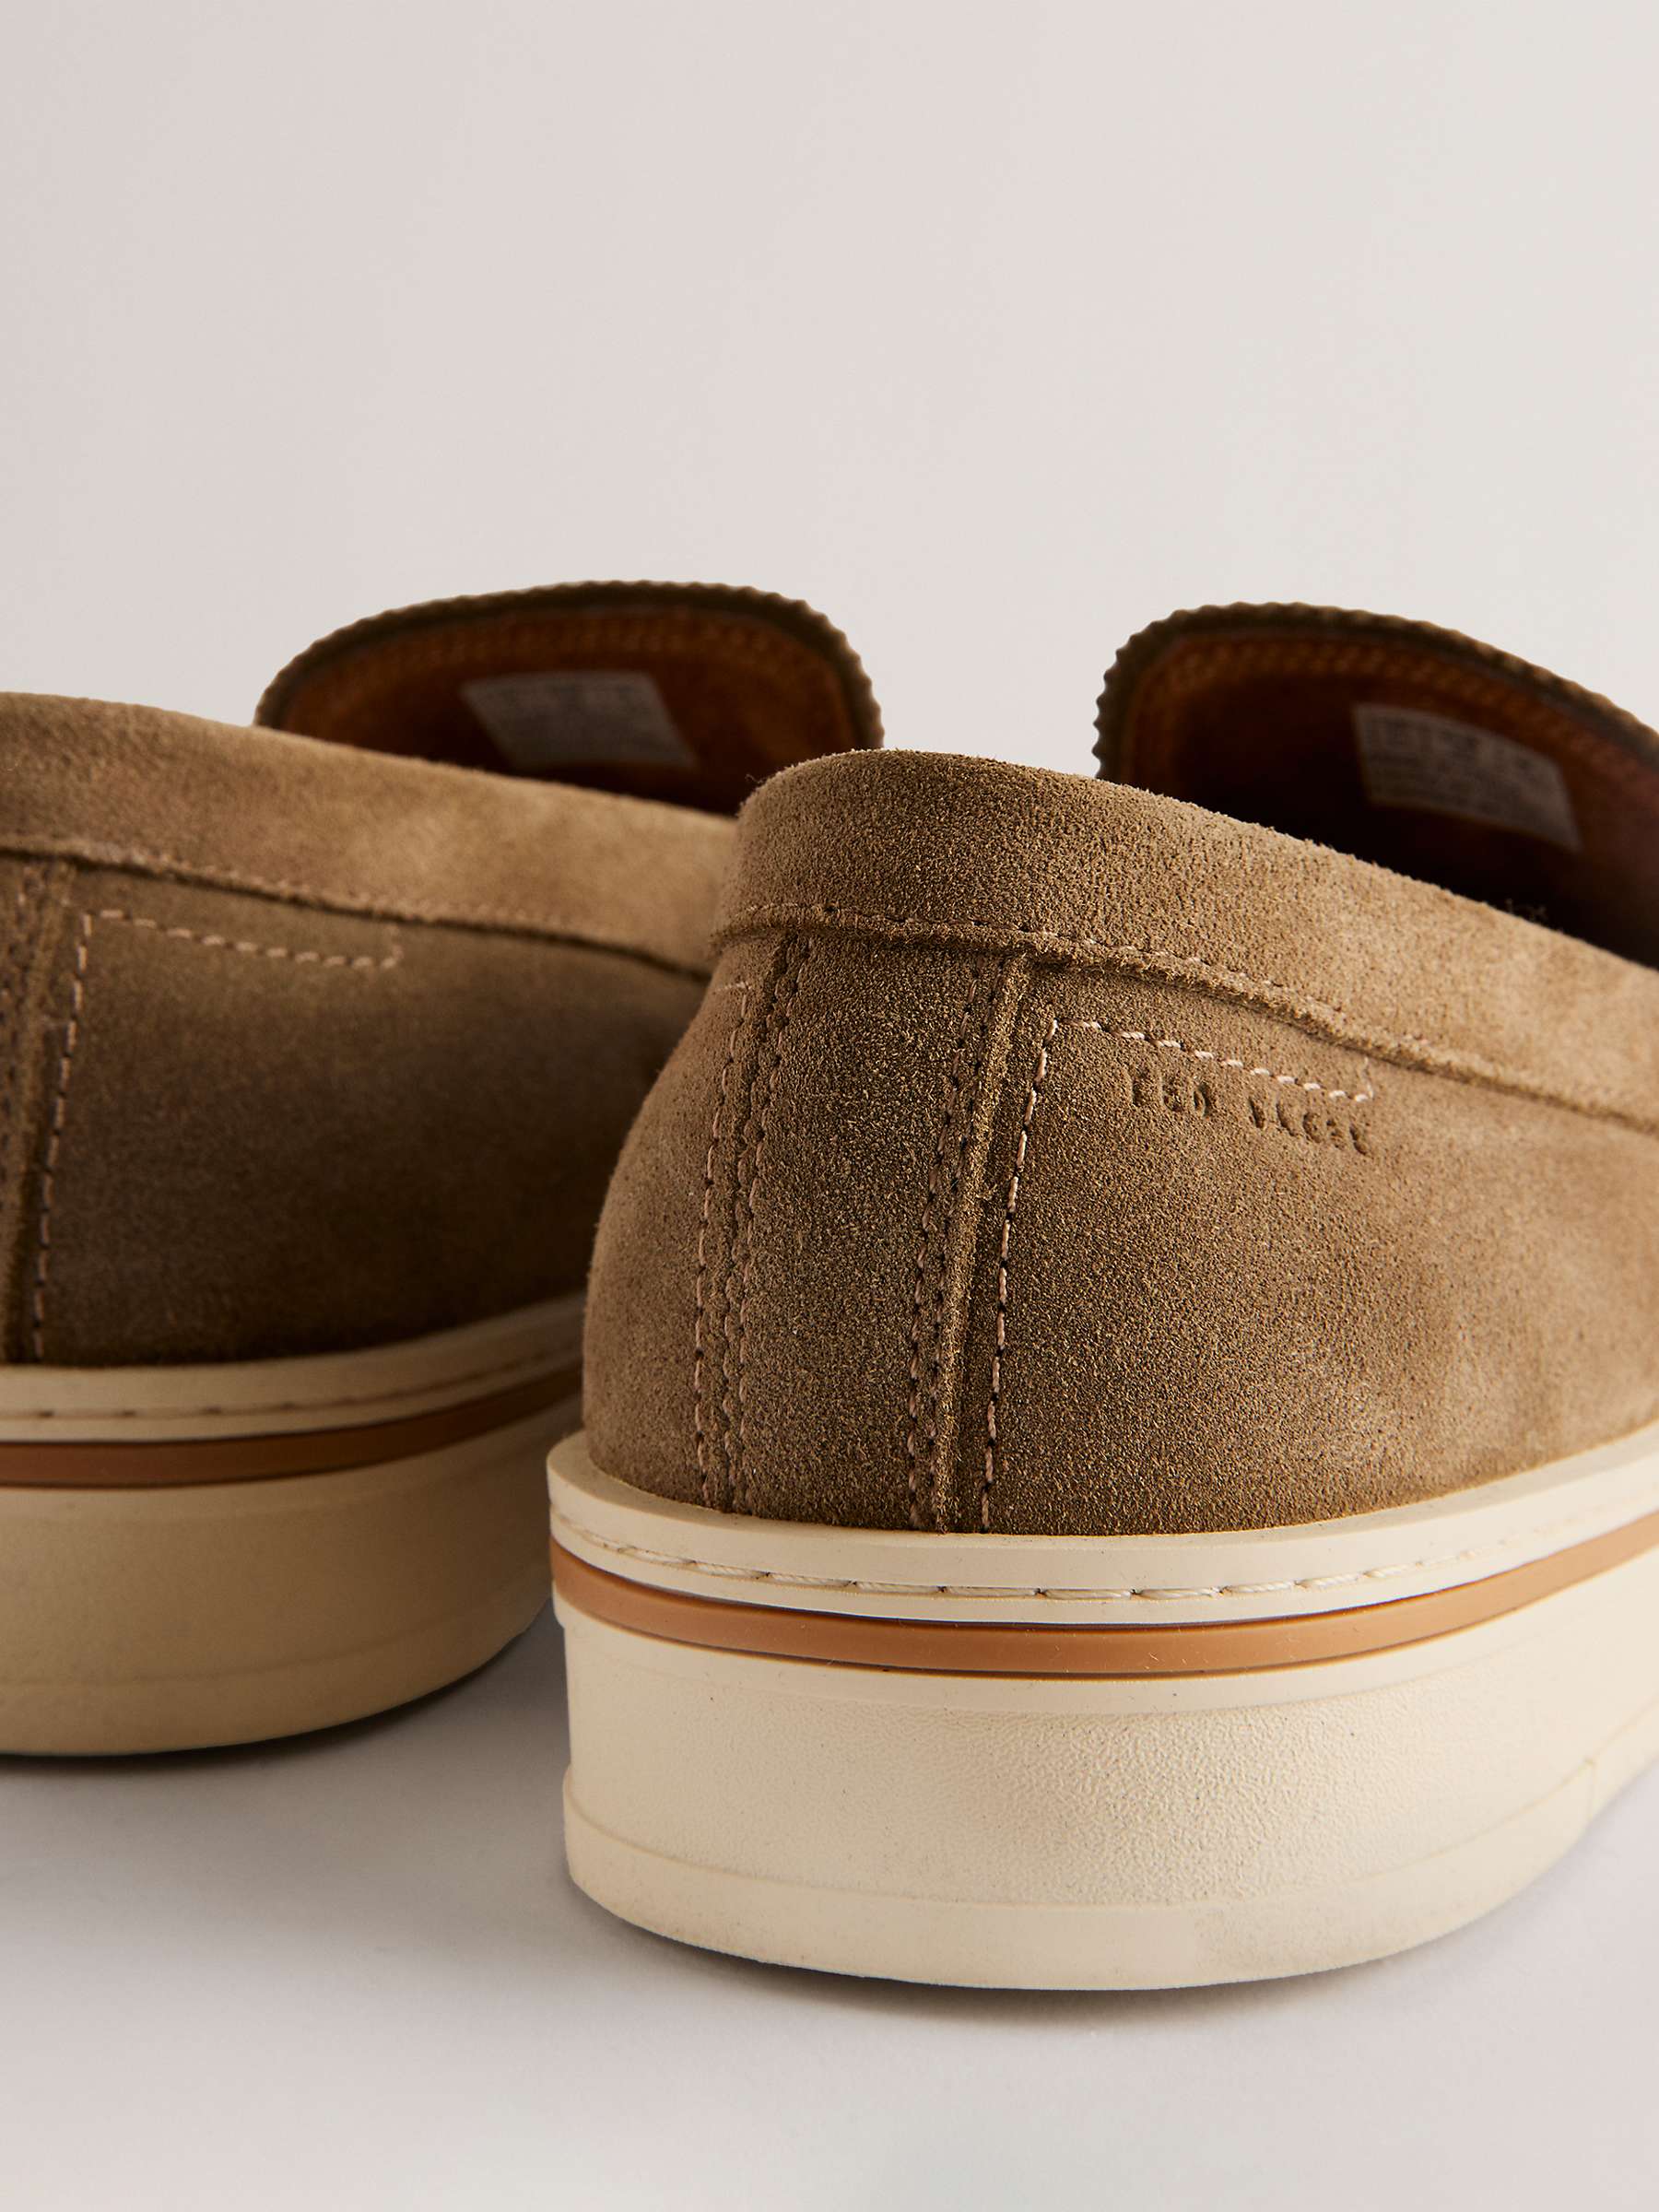 Buy Ted Baker Hampshr Court Slip On Shoes Online at johnlewis.com